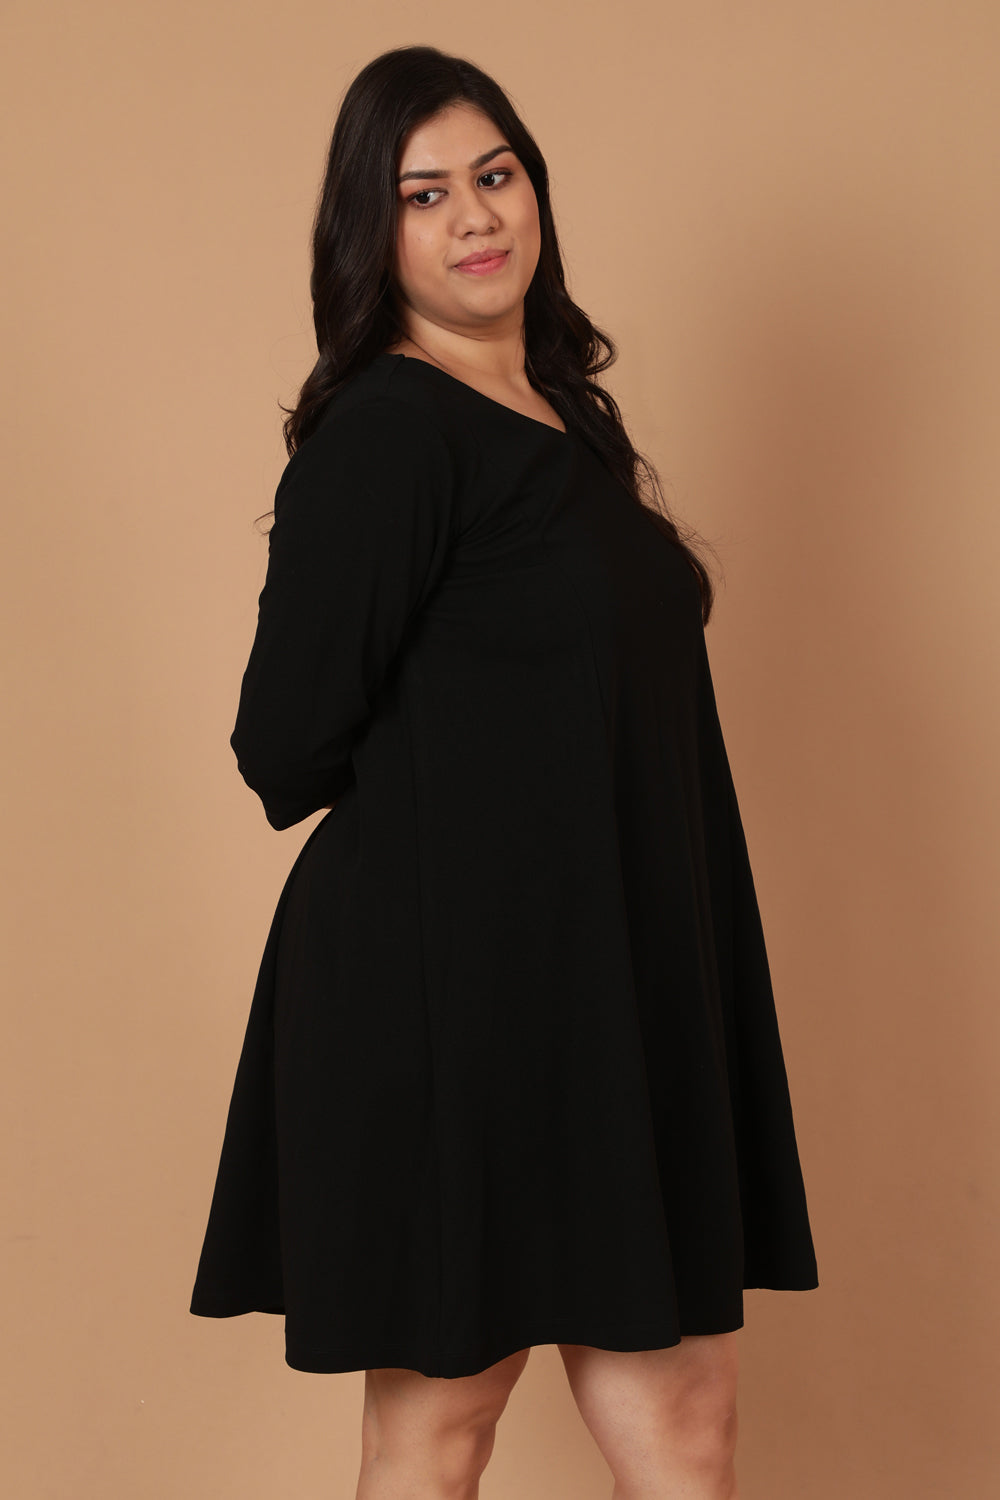 Plus Size Little Black Dress Online in India